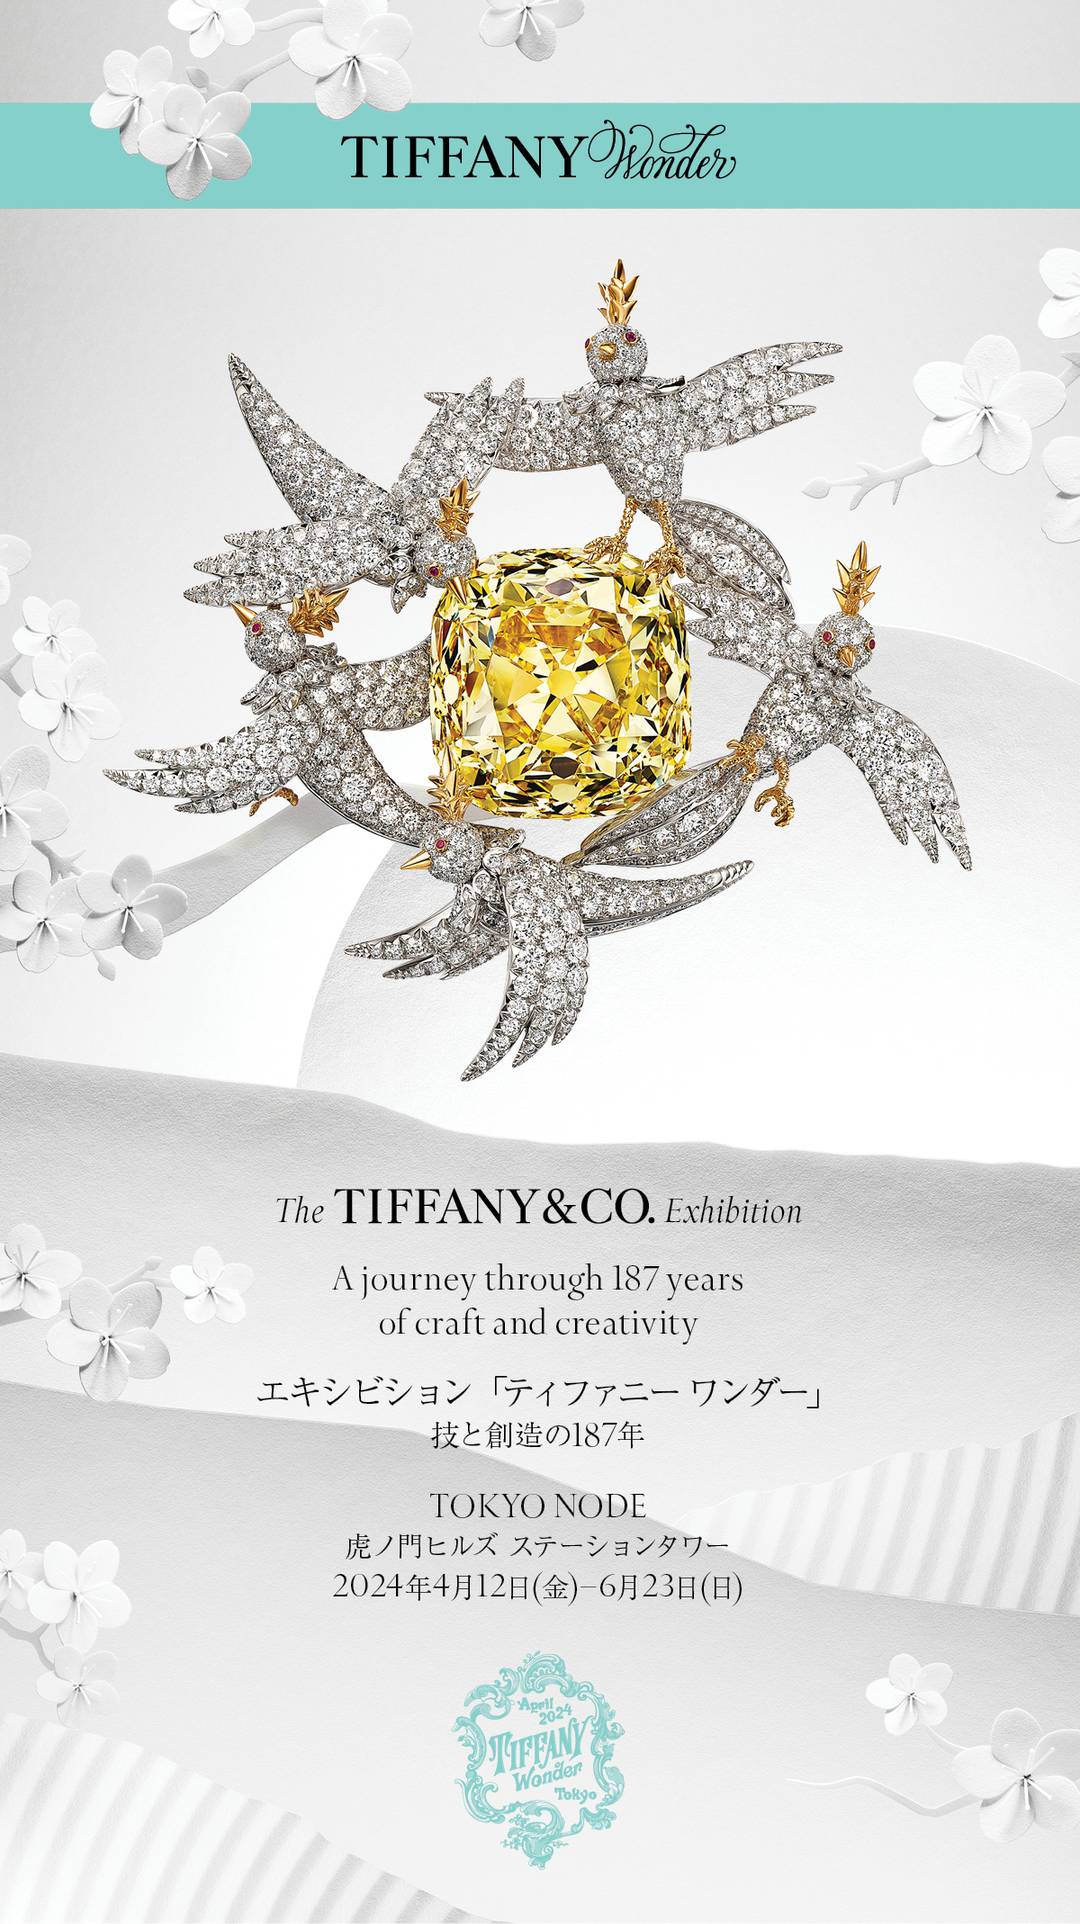 Tiffany & Co. at Tokyo Node gallery.